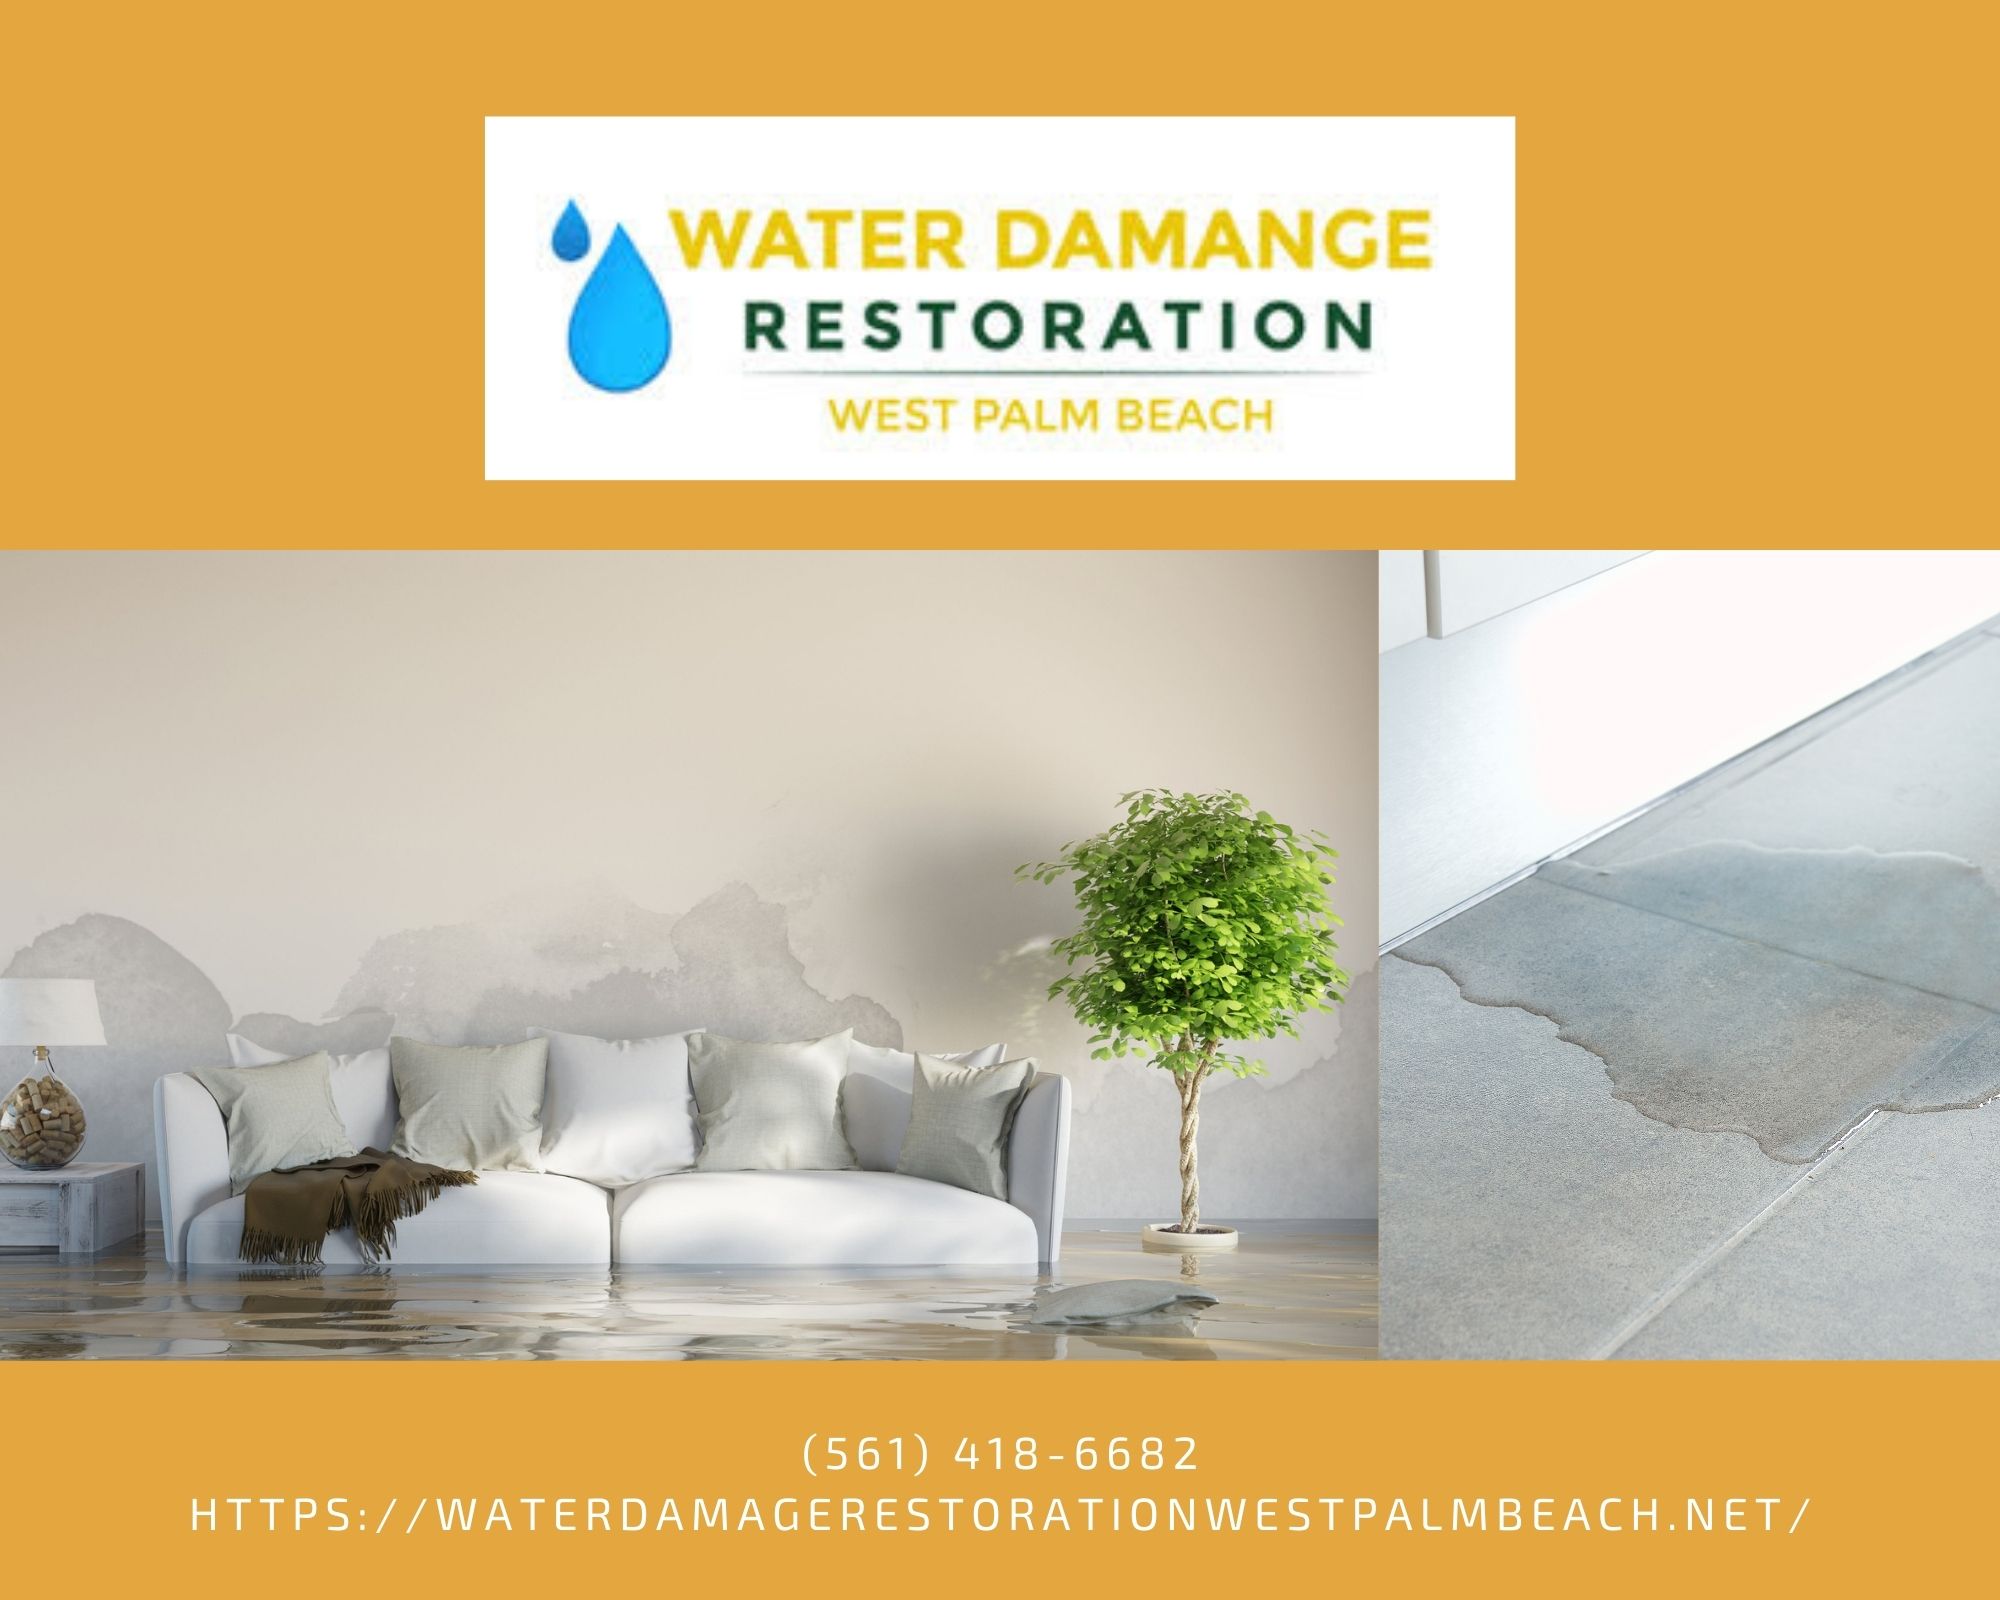 Water Damage Restoration West Palm Beach Pros Inc